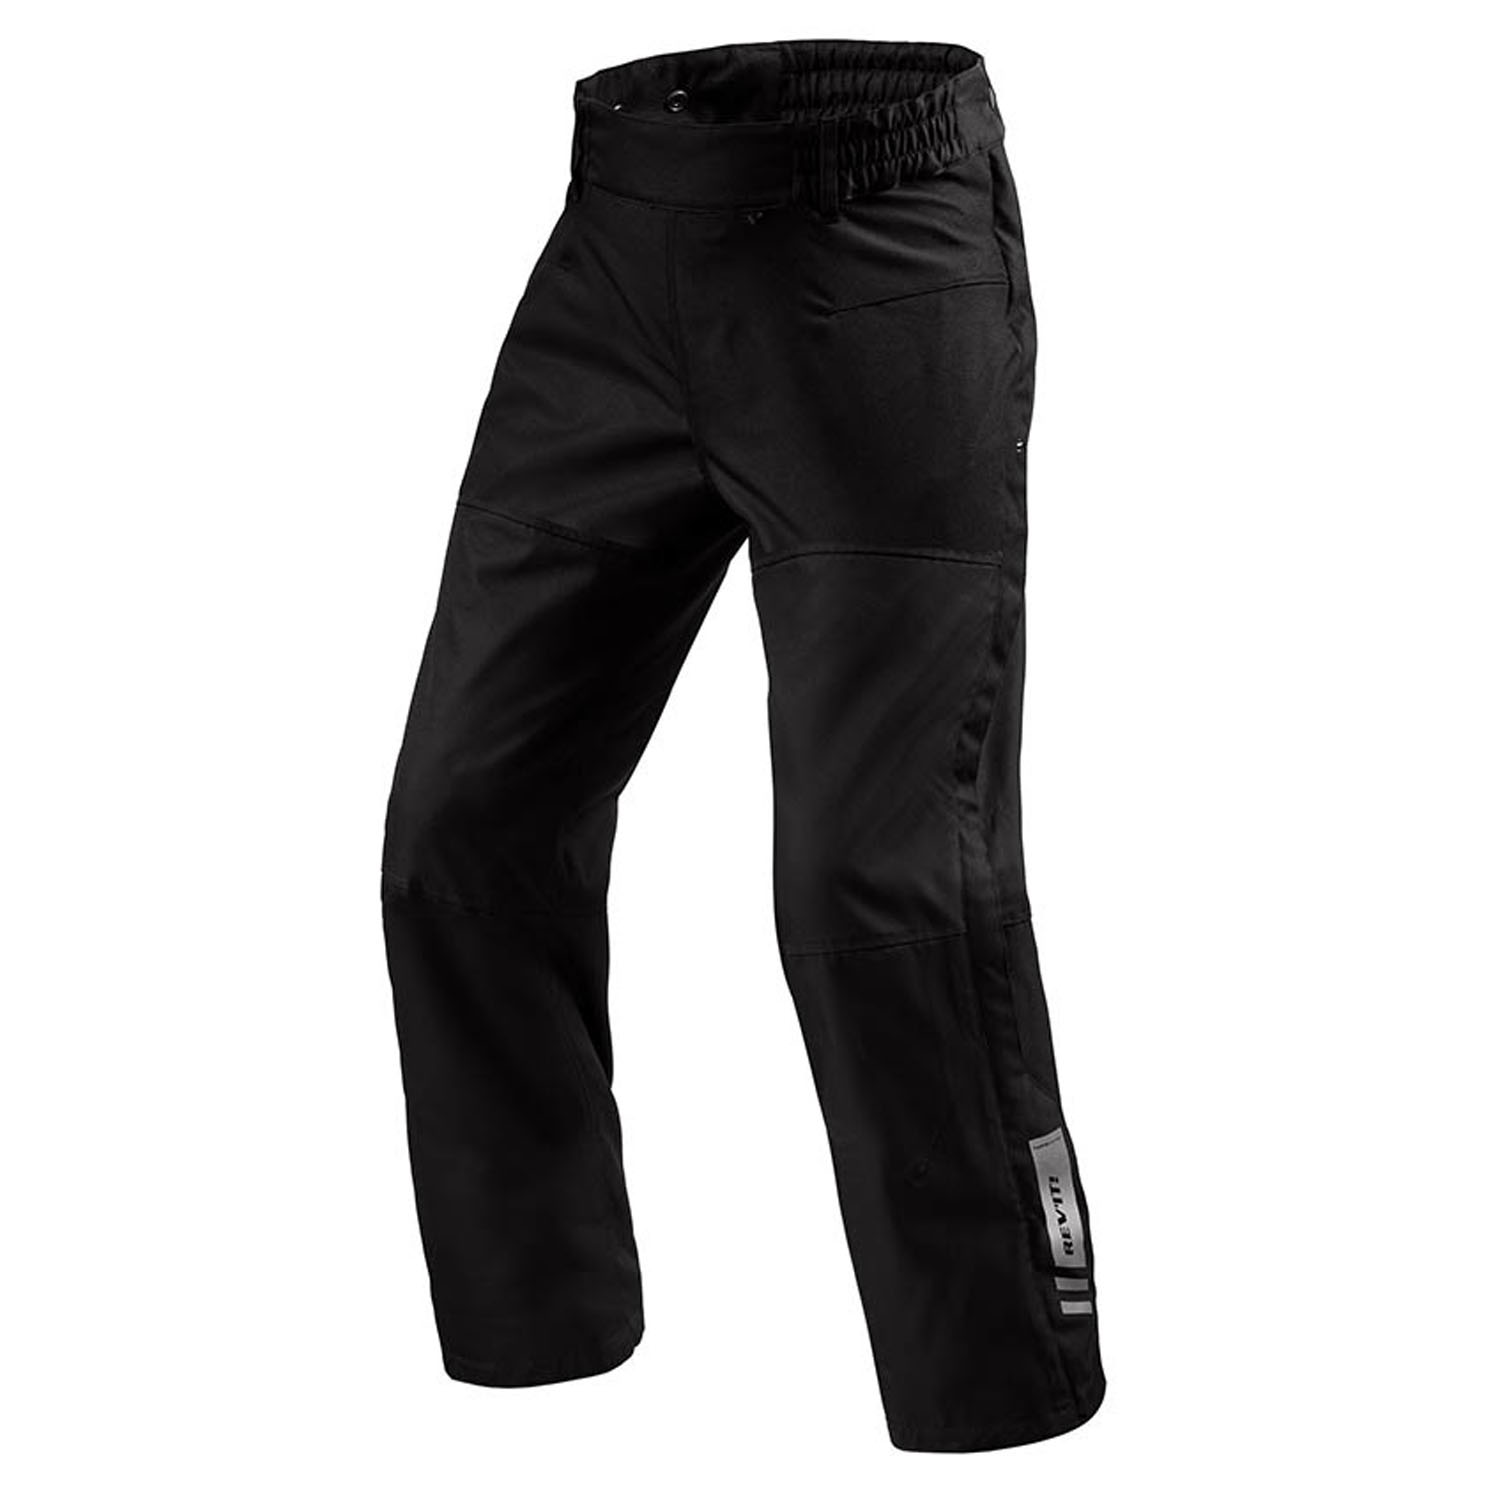 Image of REV'IT! Pants Axis 2 H2O Black Long Motorcycle Pants Size M ID 8700001350785